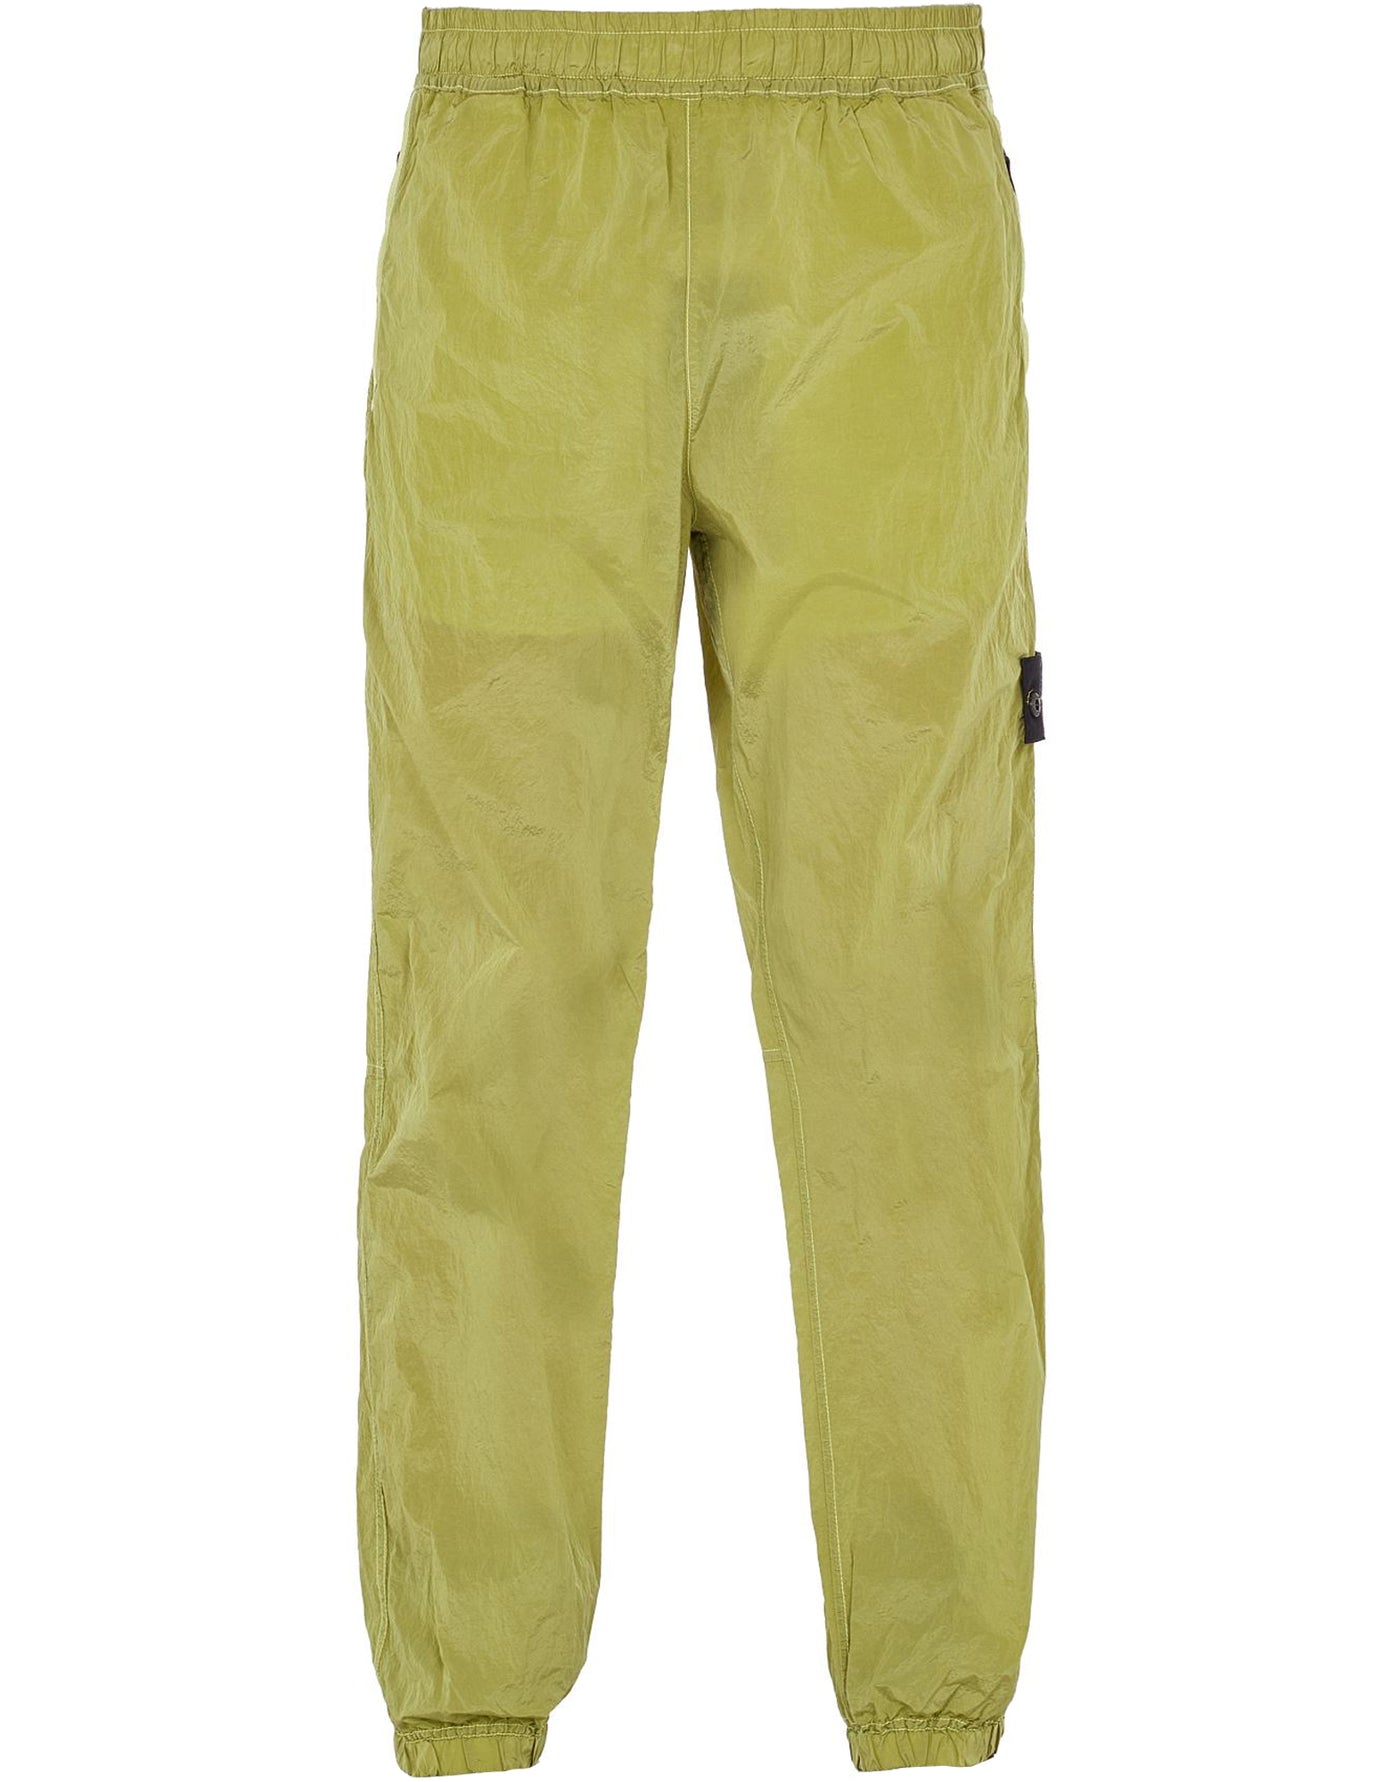 Stone Island - pantalon jaune en nylon